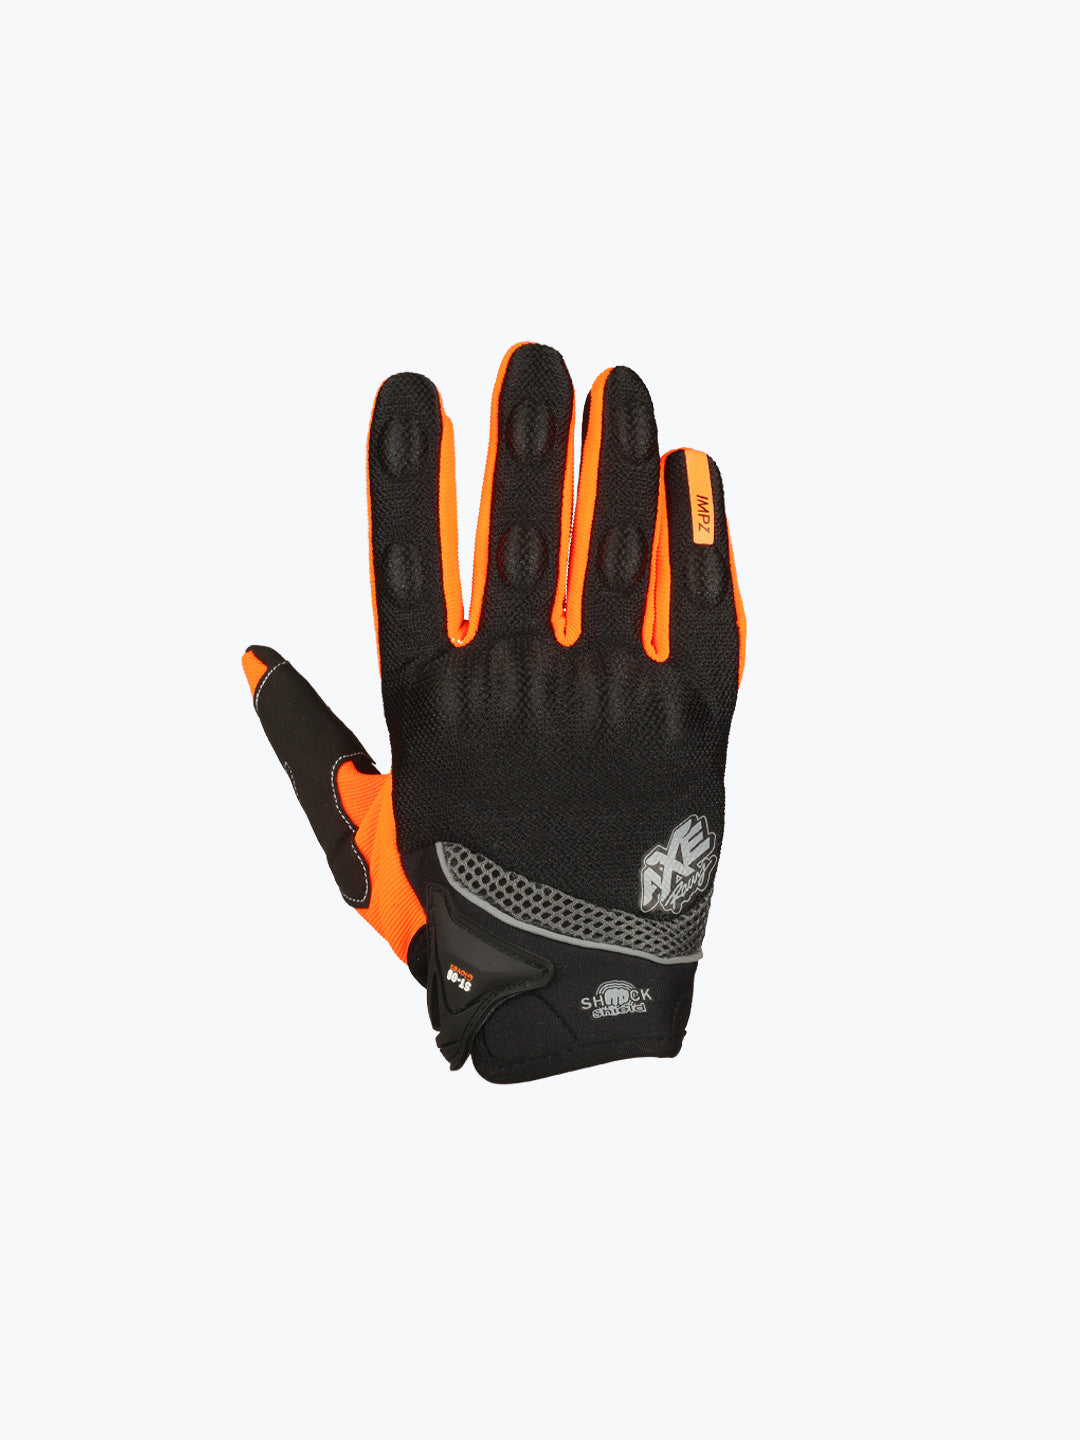 AXE Racing Gloves St09 Black Orange